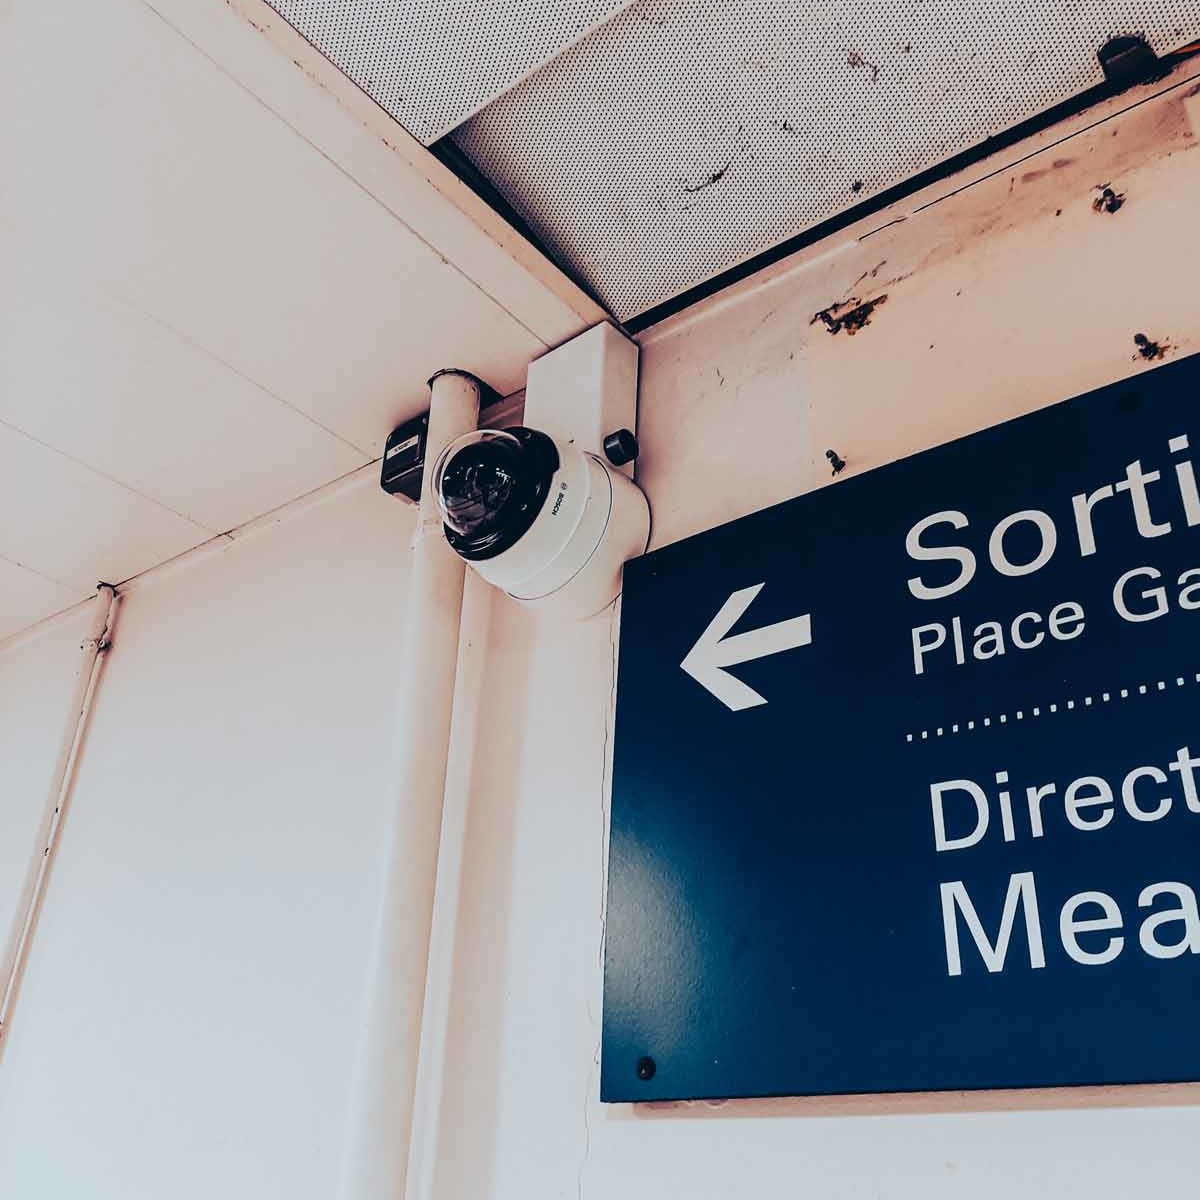 Gare SNCF vidéo surveillance